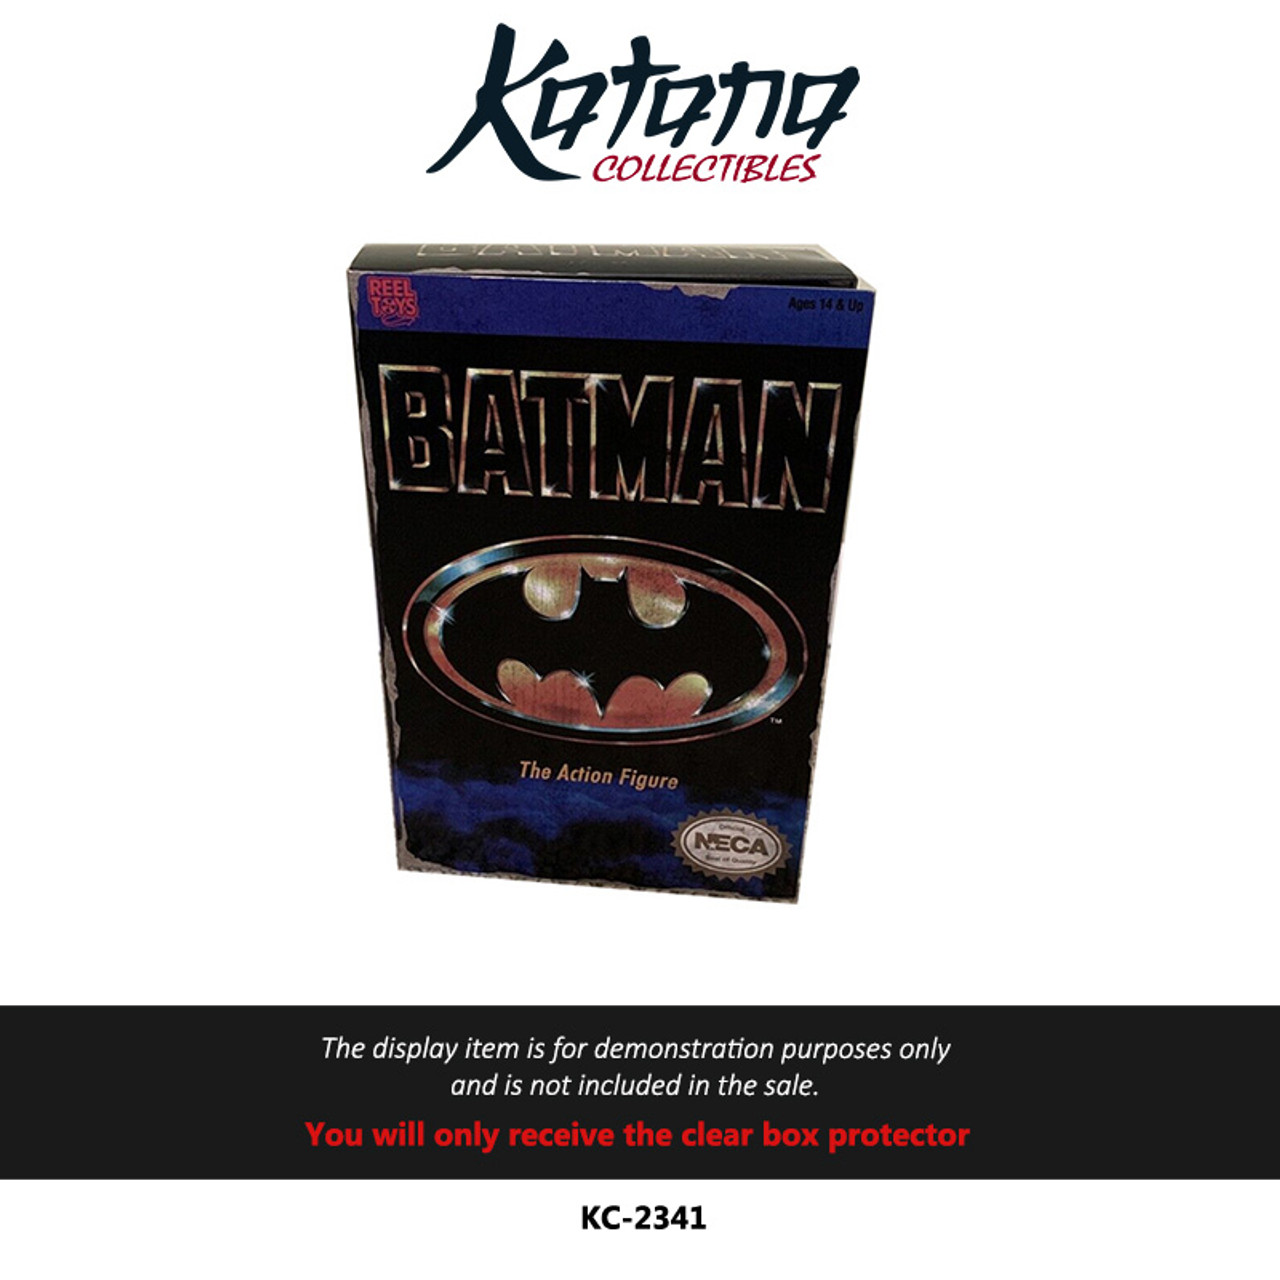 Katana Collectibles Protector For NECA 1989 Batman Video Game Apperance 8 Bit NES Figure